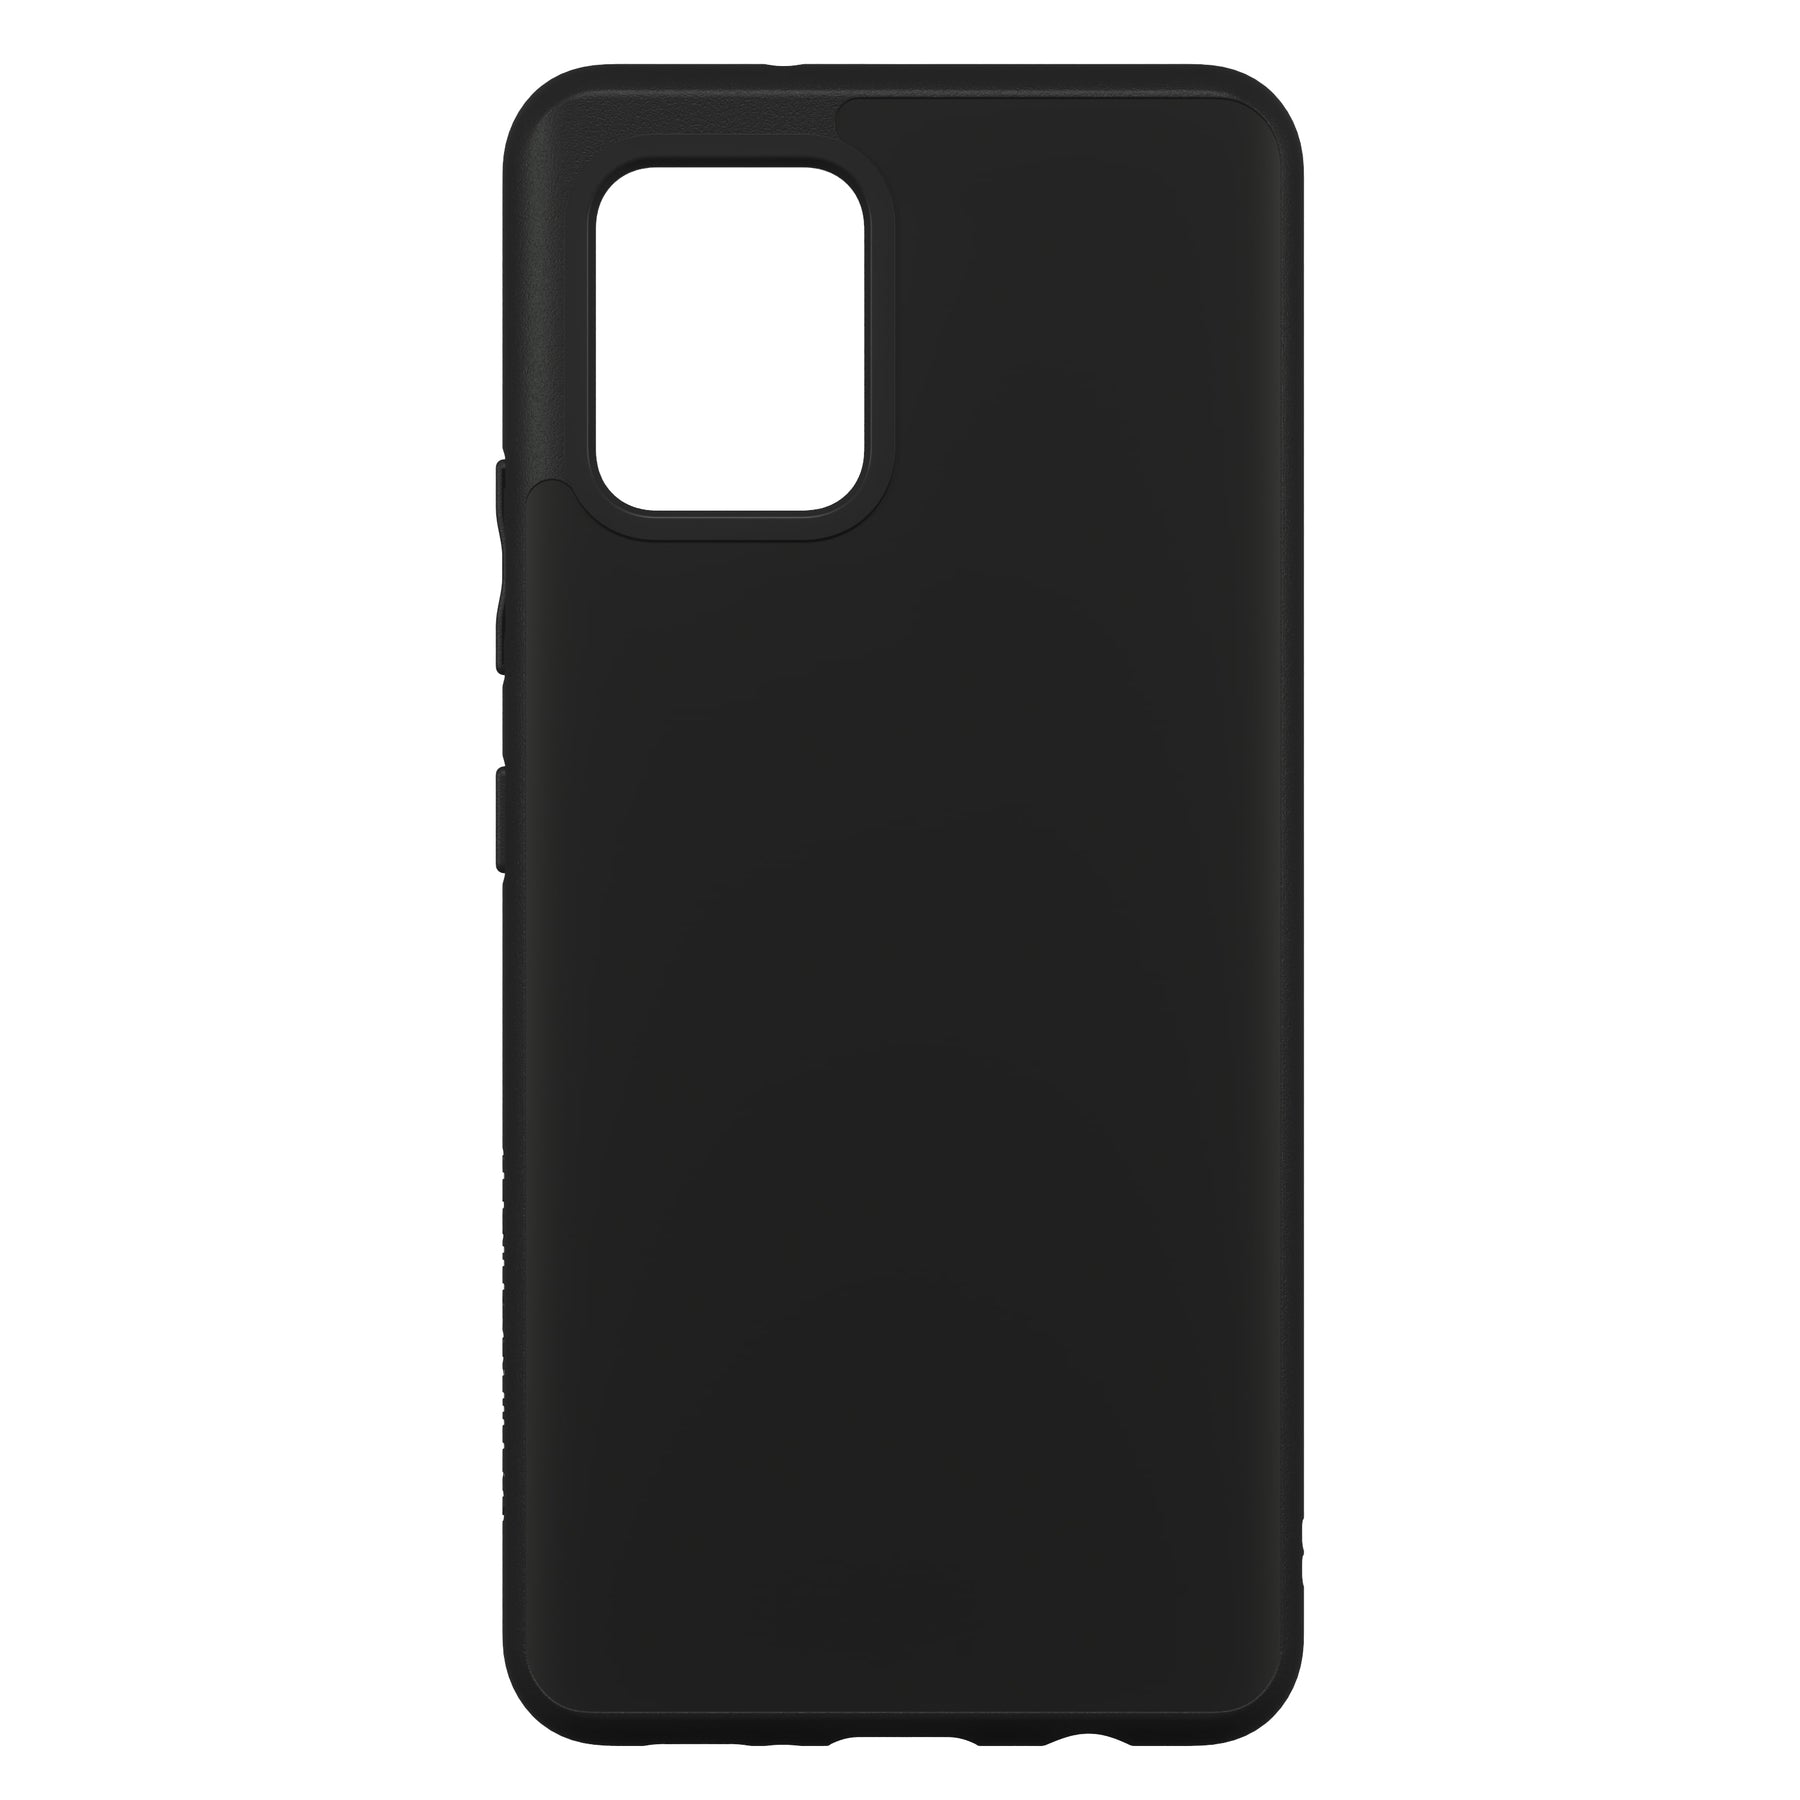 RhinoShield SolidSuit Samsung Galaxy A42 Case Casing Cover